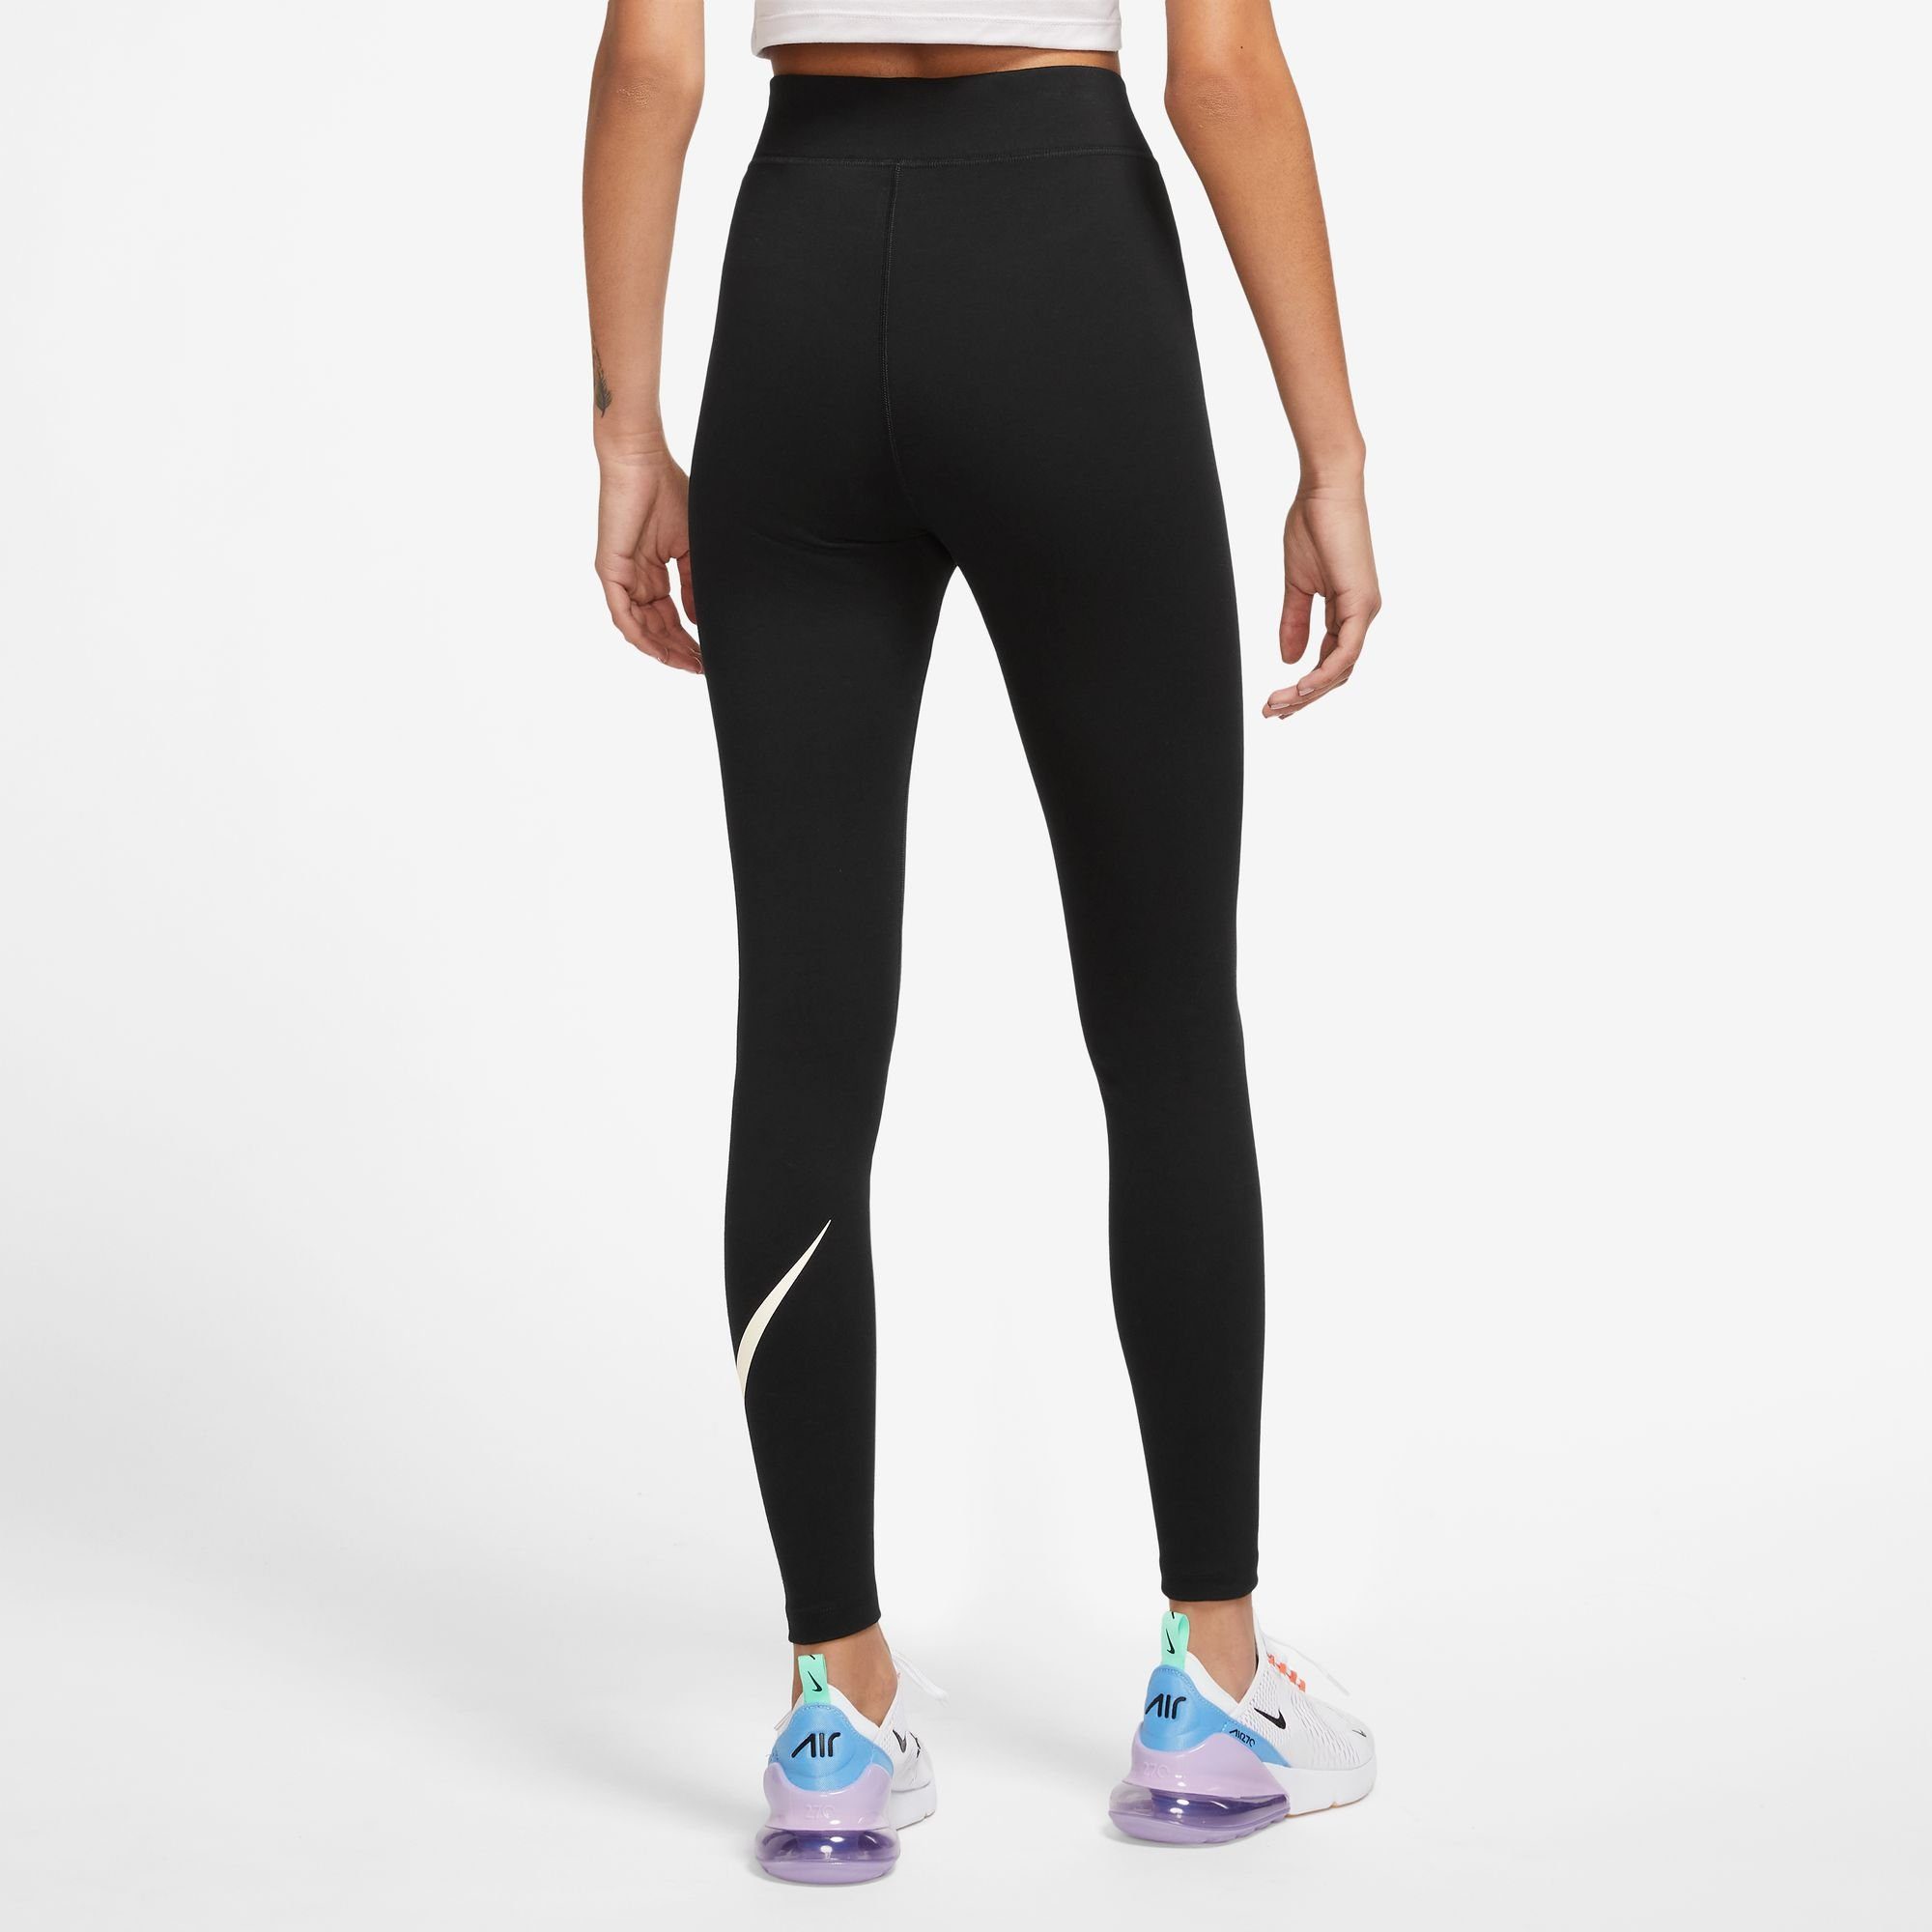 GRAPHIC Leggings Nike HIGH-WAISTED BLACK/SAIL Sportswear LEGGINGS WOMEN'S CLASSICS